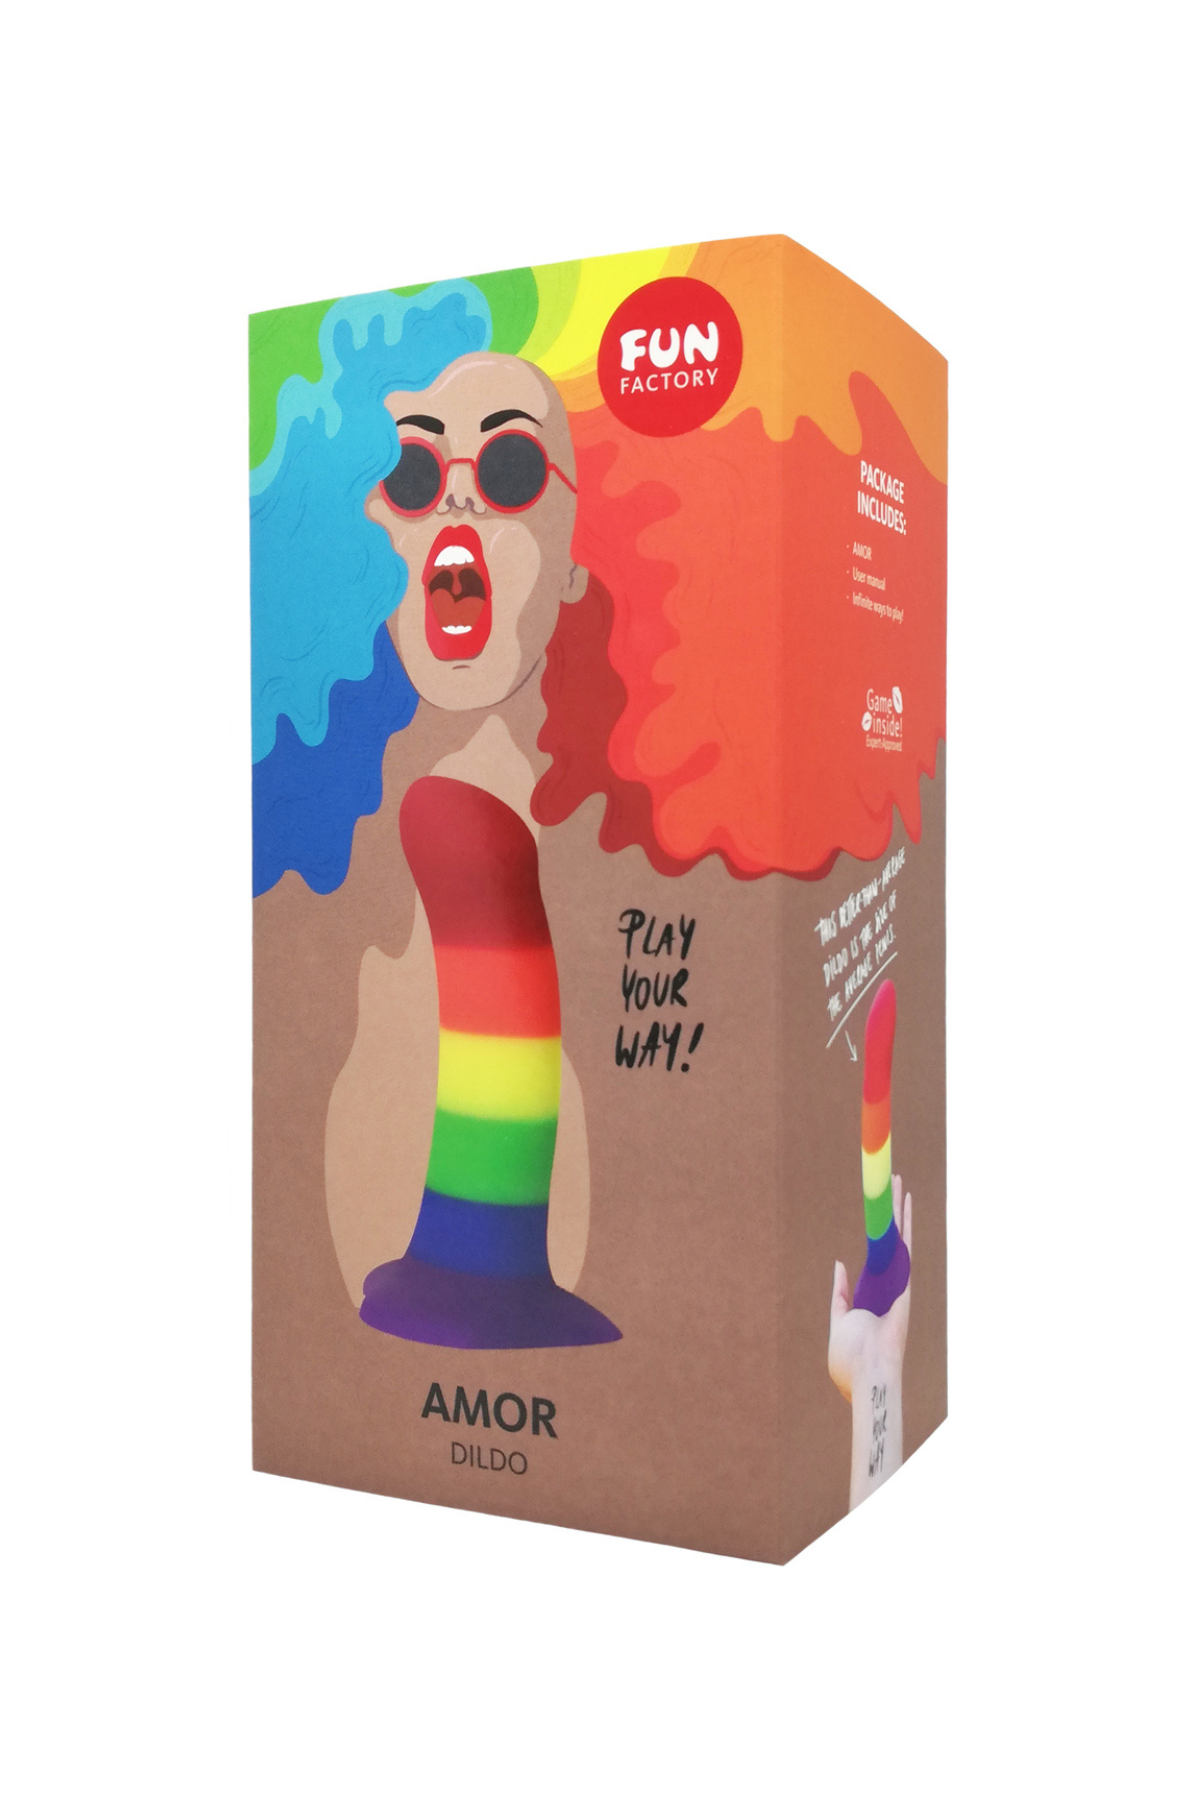 Amor Pride Stub Dildo Fun Factory Box